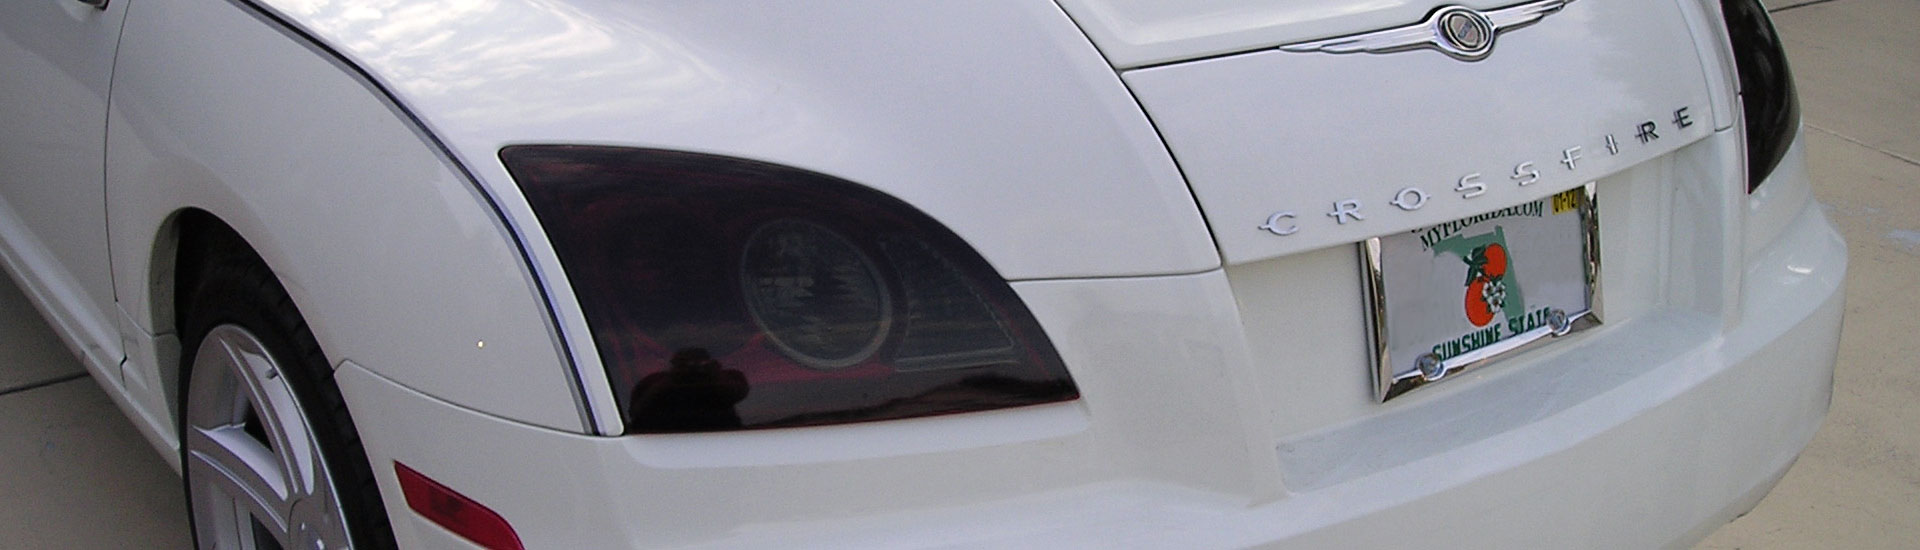 Chrysler Tail Light Tint Covers